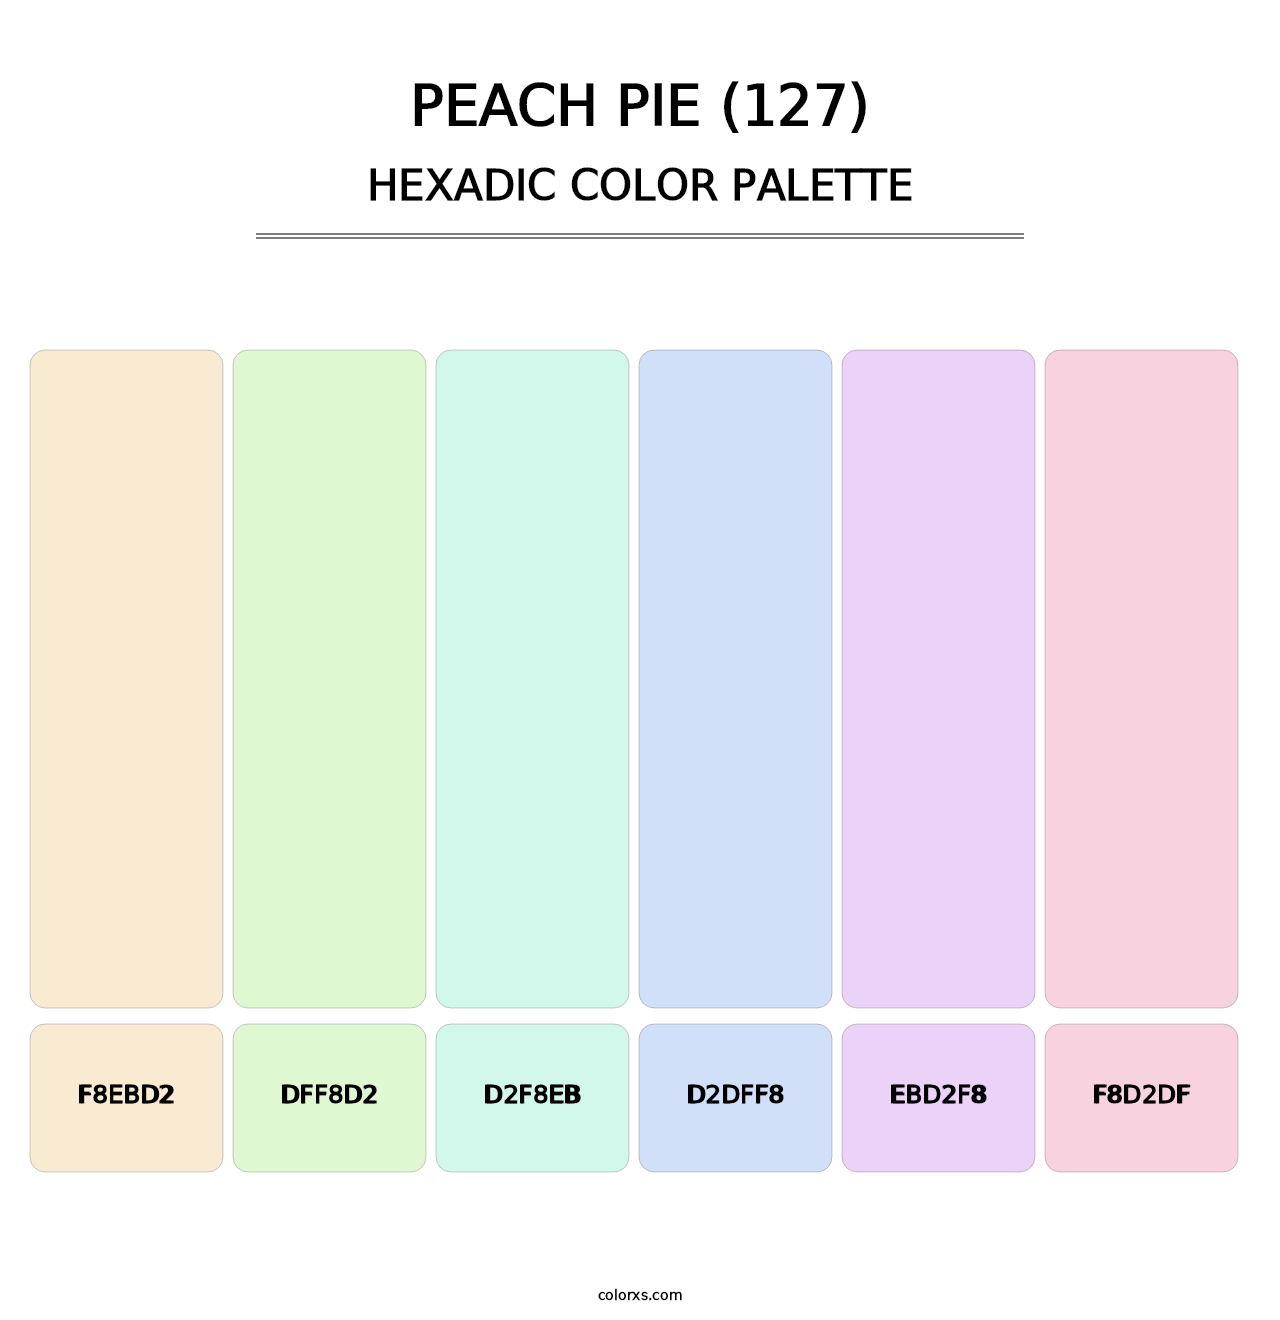 Peach Pie (127) - Hexadic Color Palette